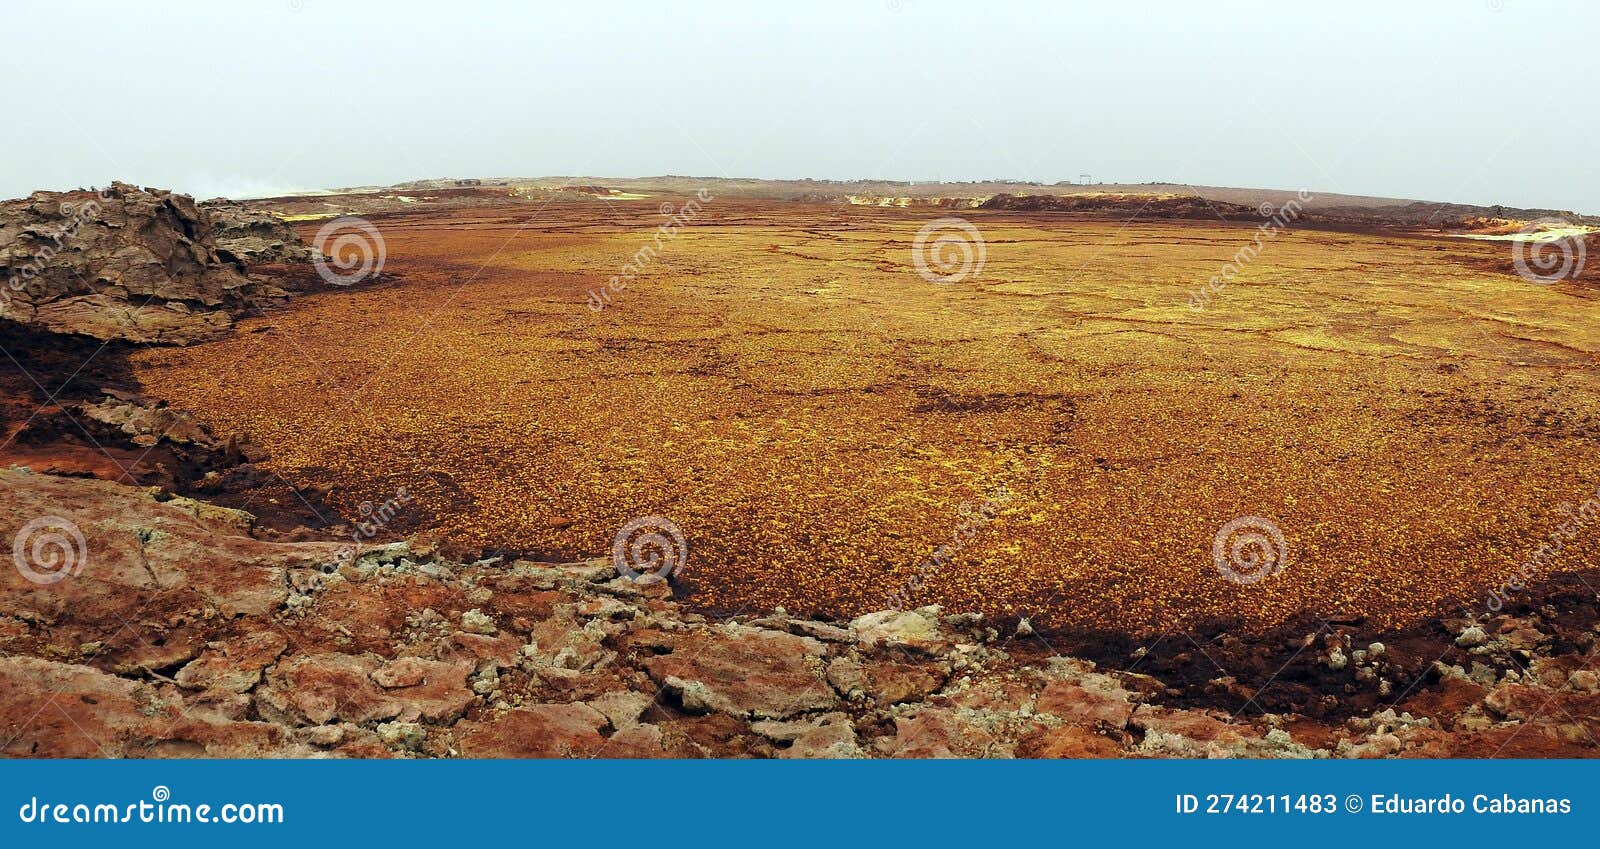 landscape of the danakil depression, azar region, ethiopia